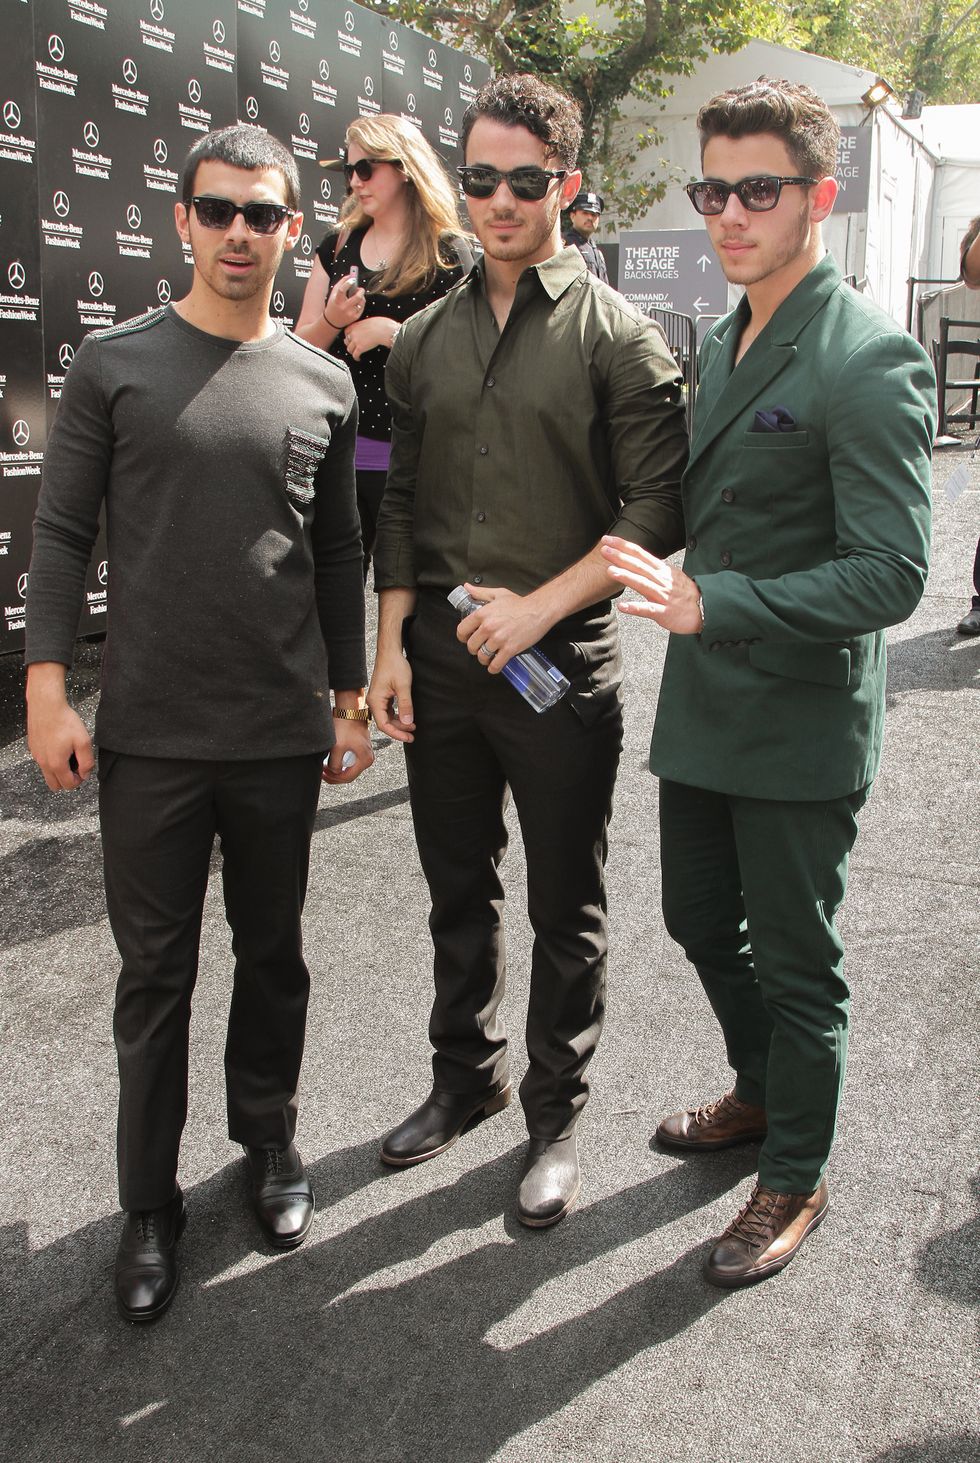 Jonas Brothers' Fashion History - Nick, Joe, and Kevin Jonas's Style ...